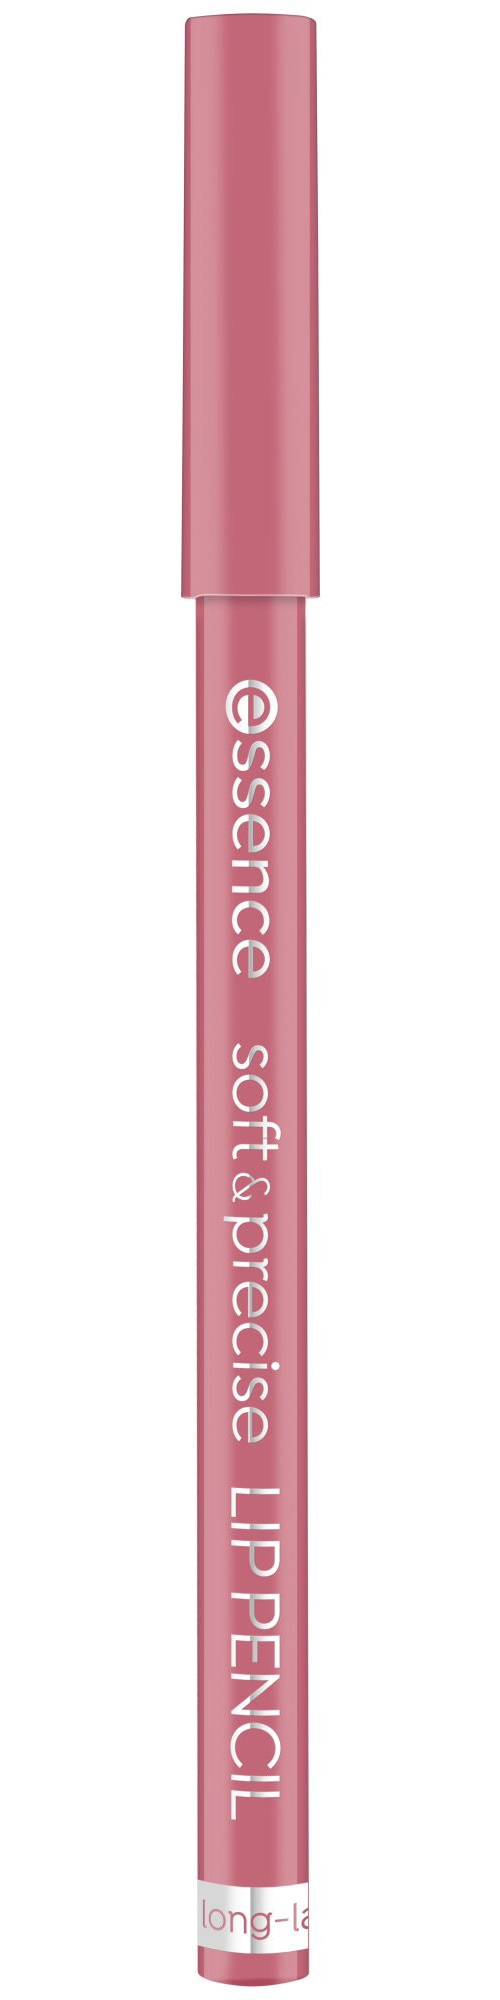 Essence Schmink-Set »Embrace Yourself Beauty Box«, (Set, 8 tlg.), Schmink-Set mit 8 Beauty Essentials, acetonfrei, ohne Parabene